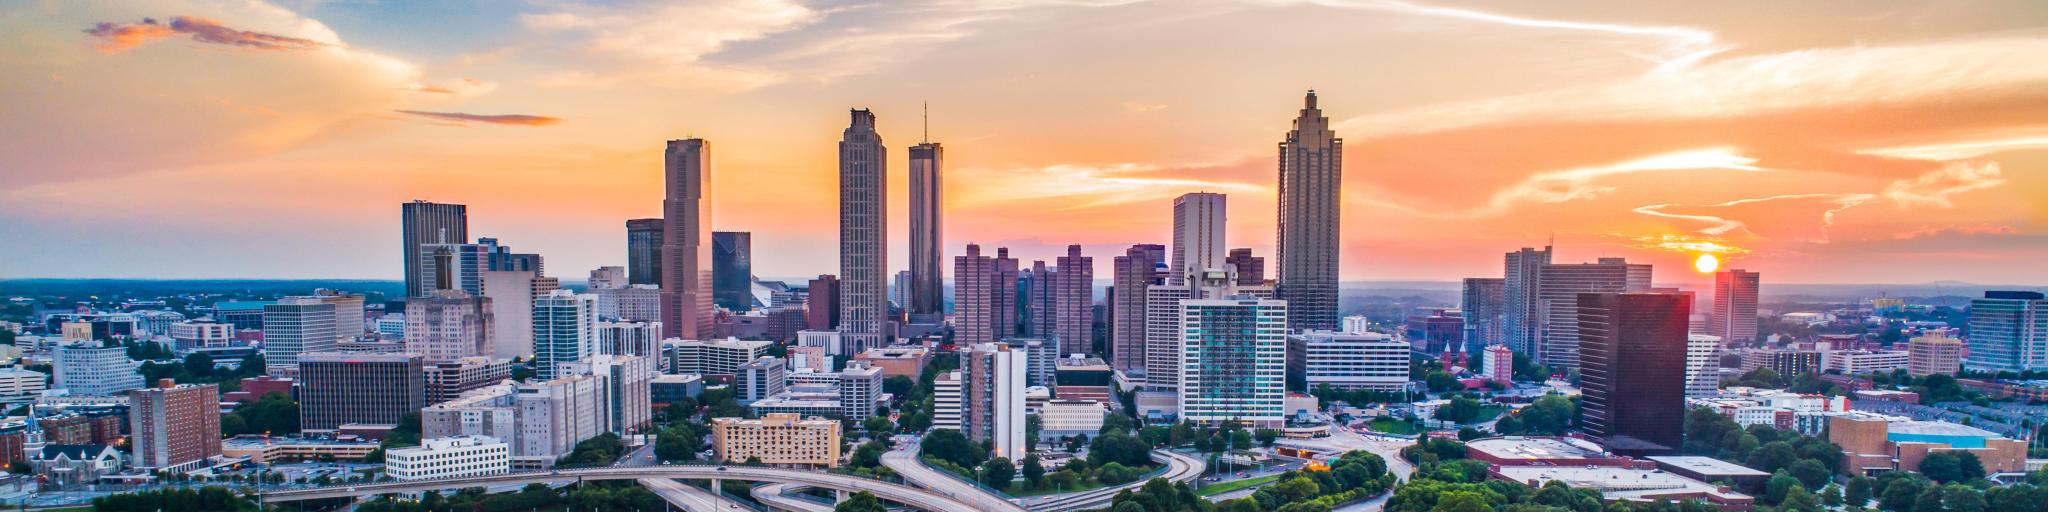 Atlanta, Georgia, USA with a panorama of the downtown skyline at sunset.